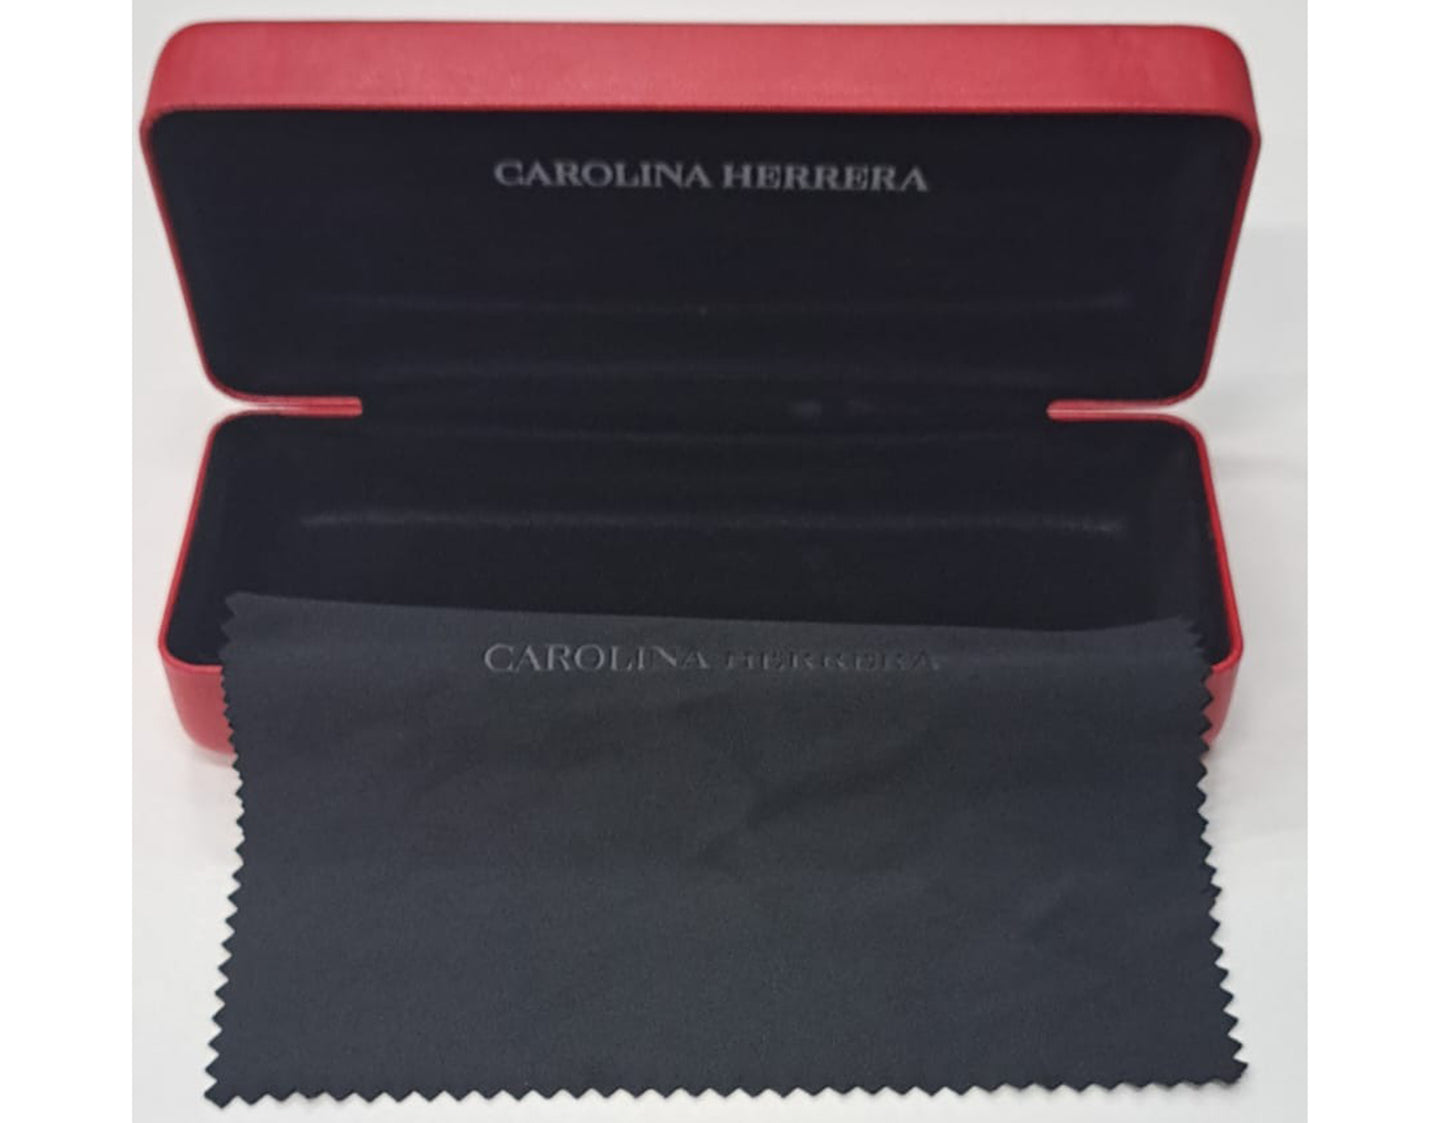 Carolina Herrera VHE817K-0GEN-53 53mm New Eyeglasses